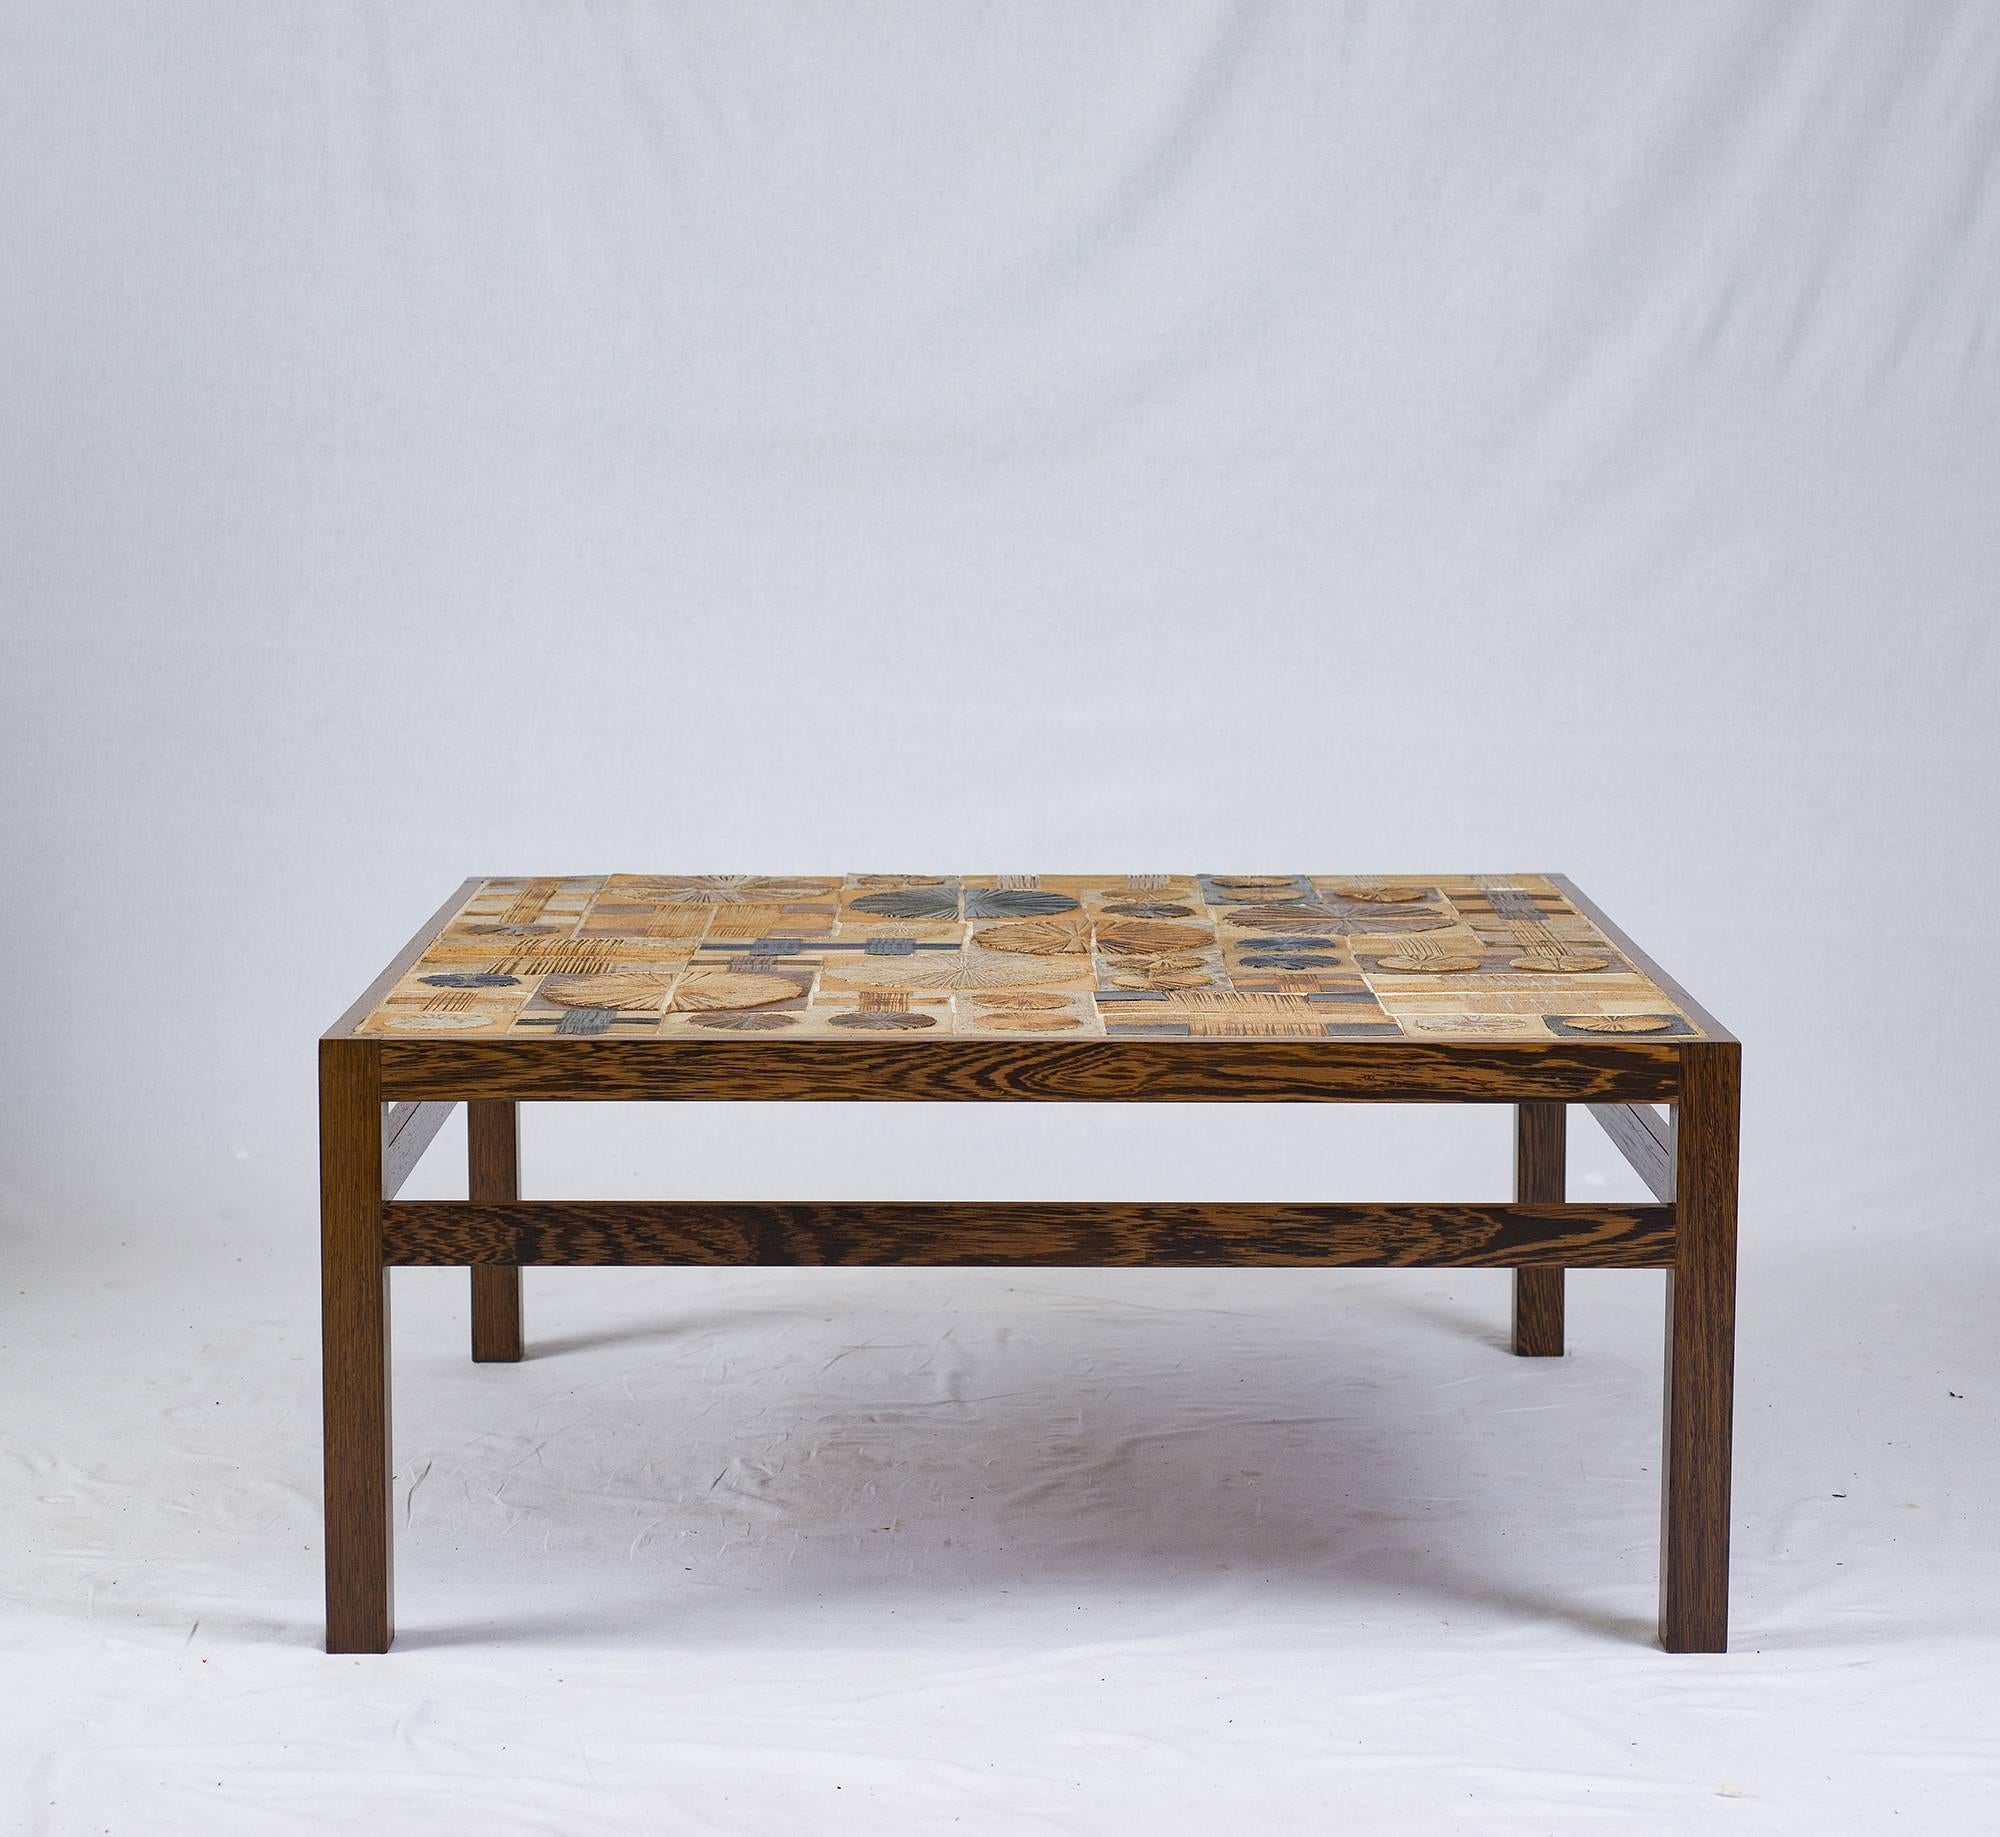 Tue Poulsen tile coffee table.